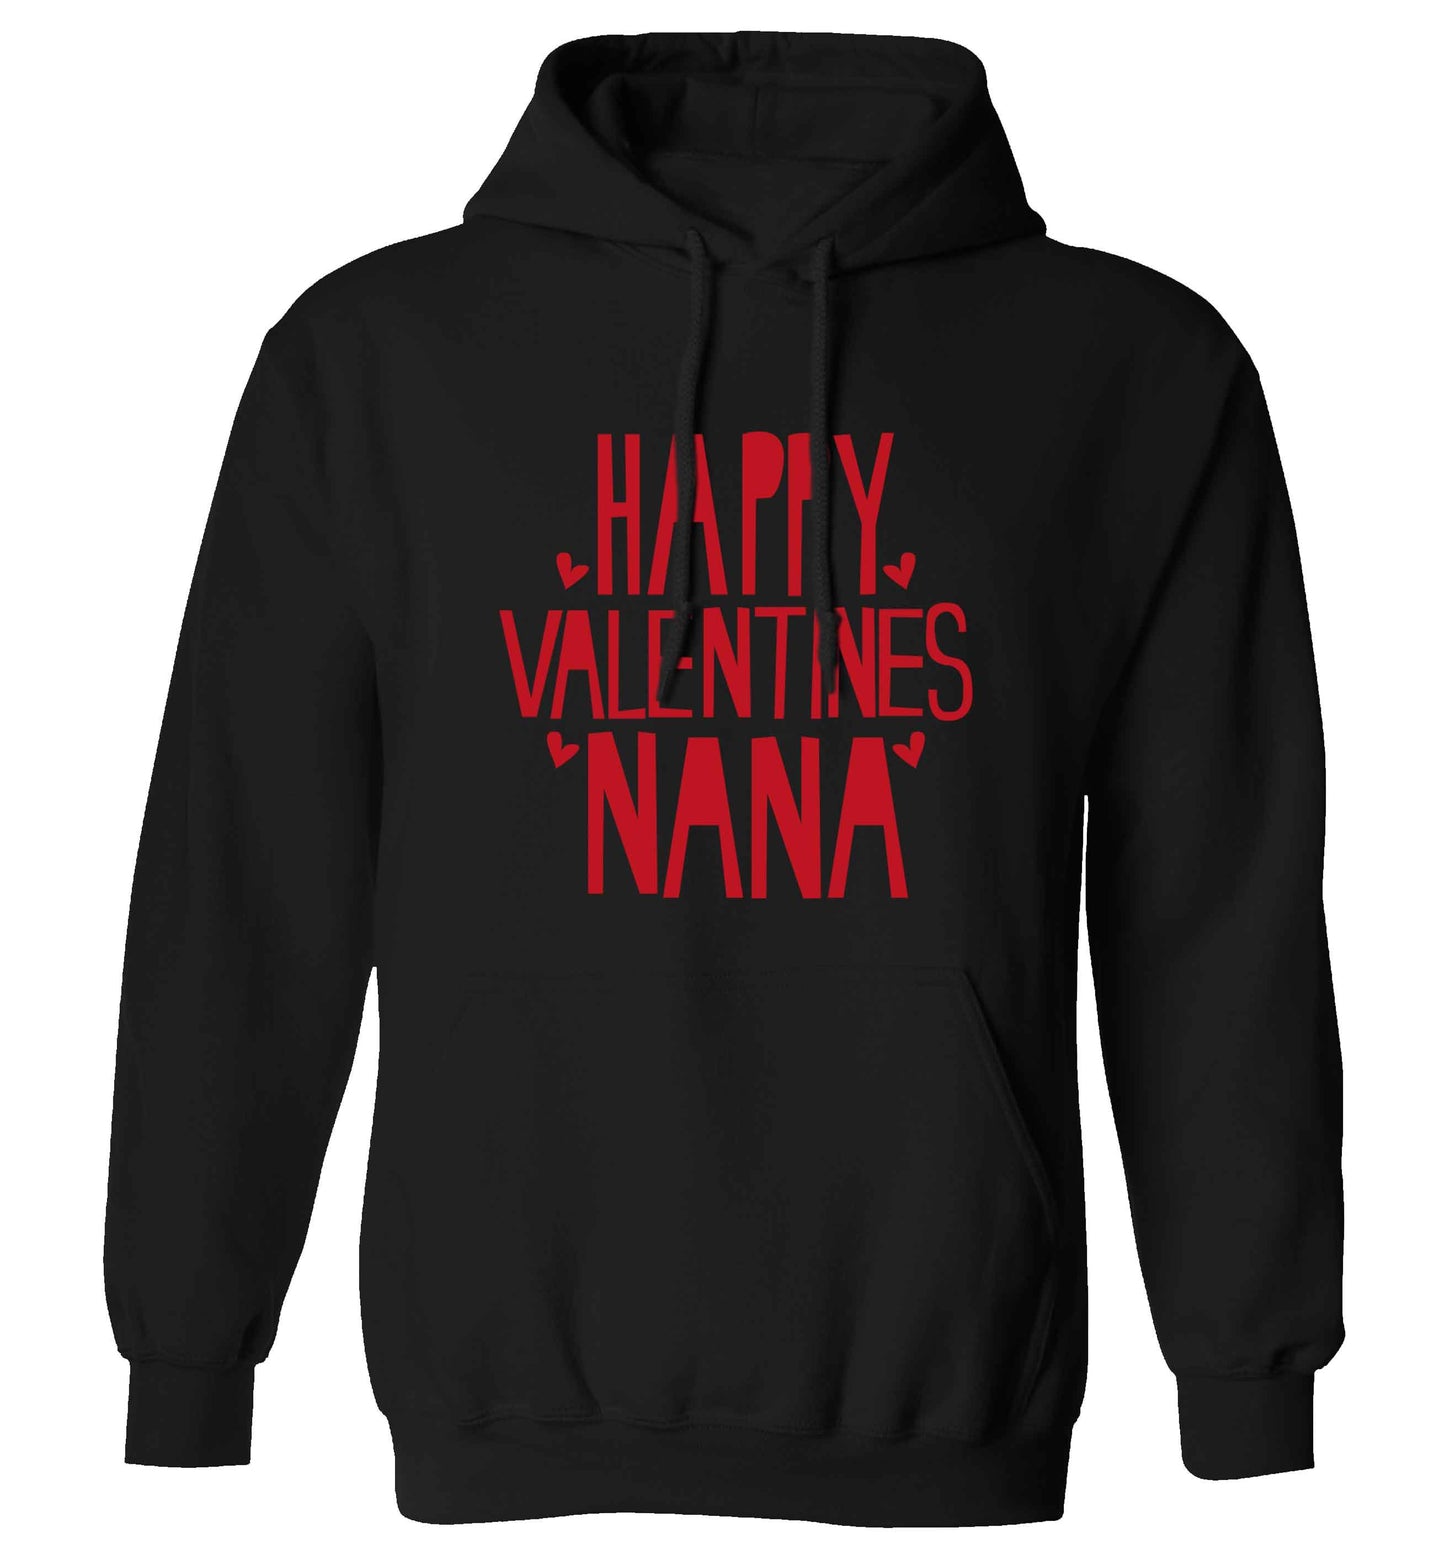 Happy valentines nana adults unisex black hoodie 2XL